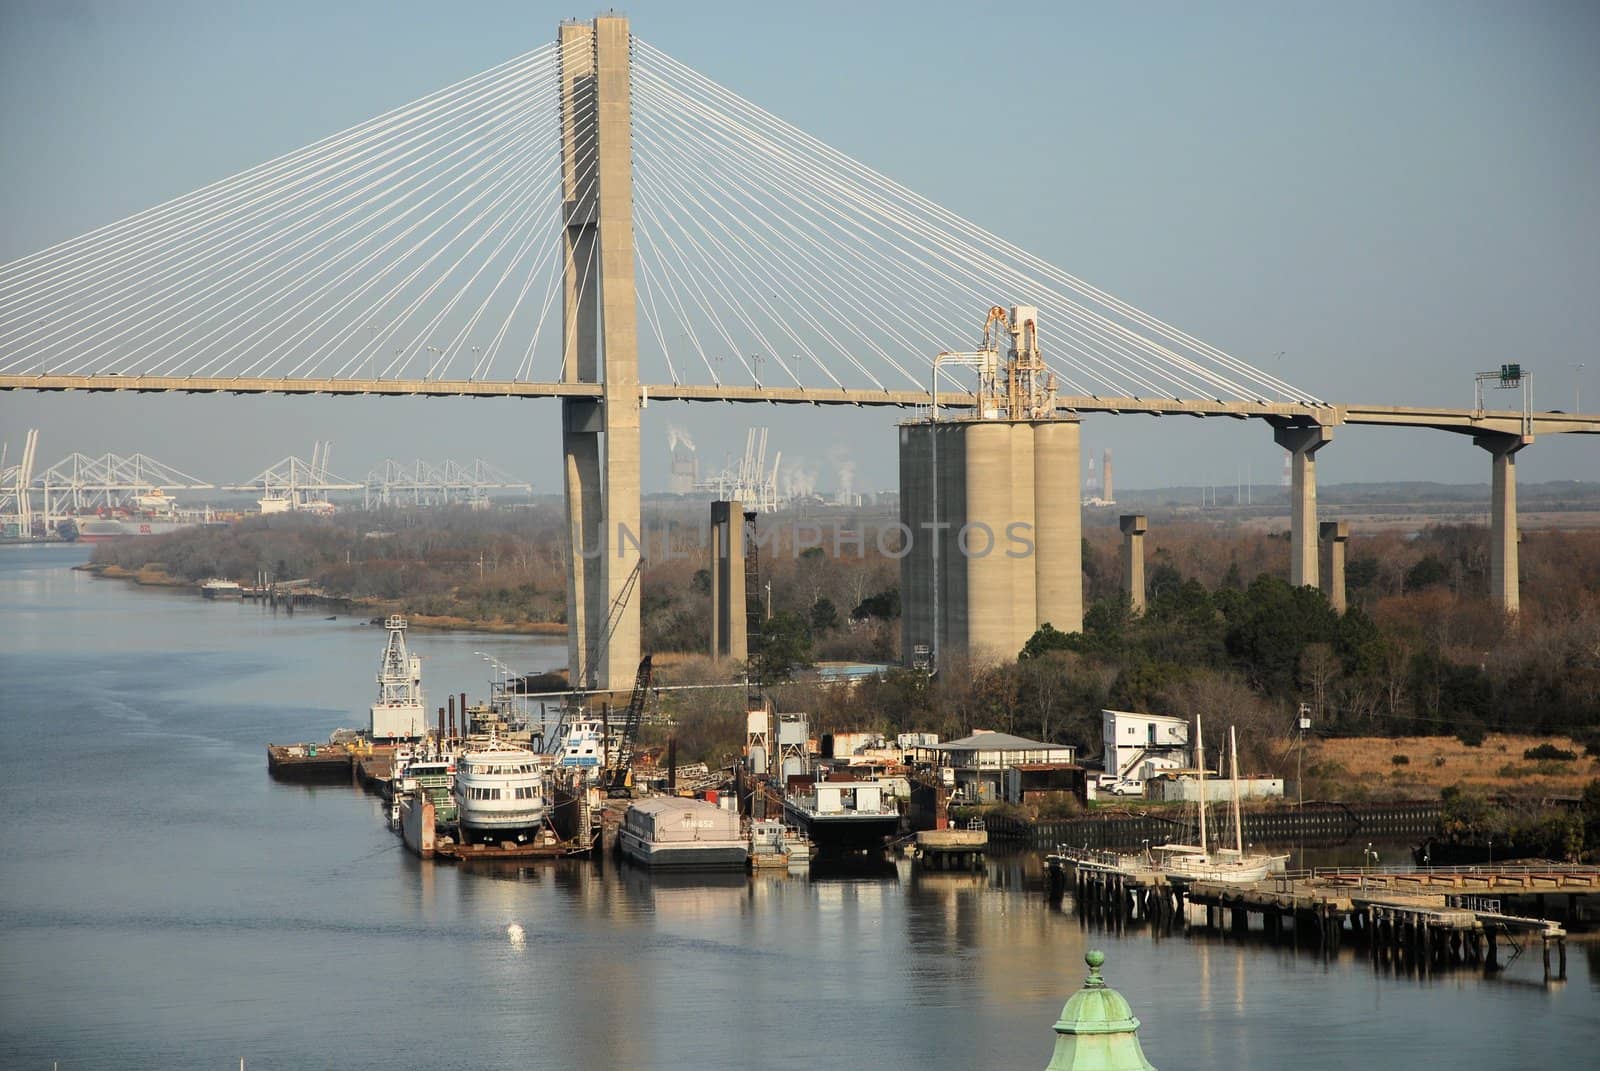 Savannah Bridge by northwoodsphoto